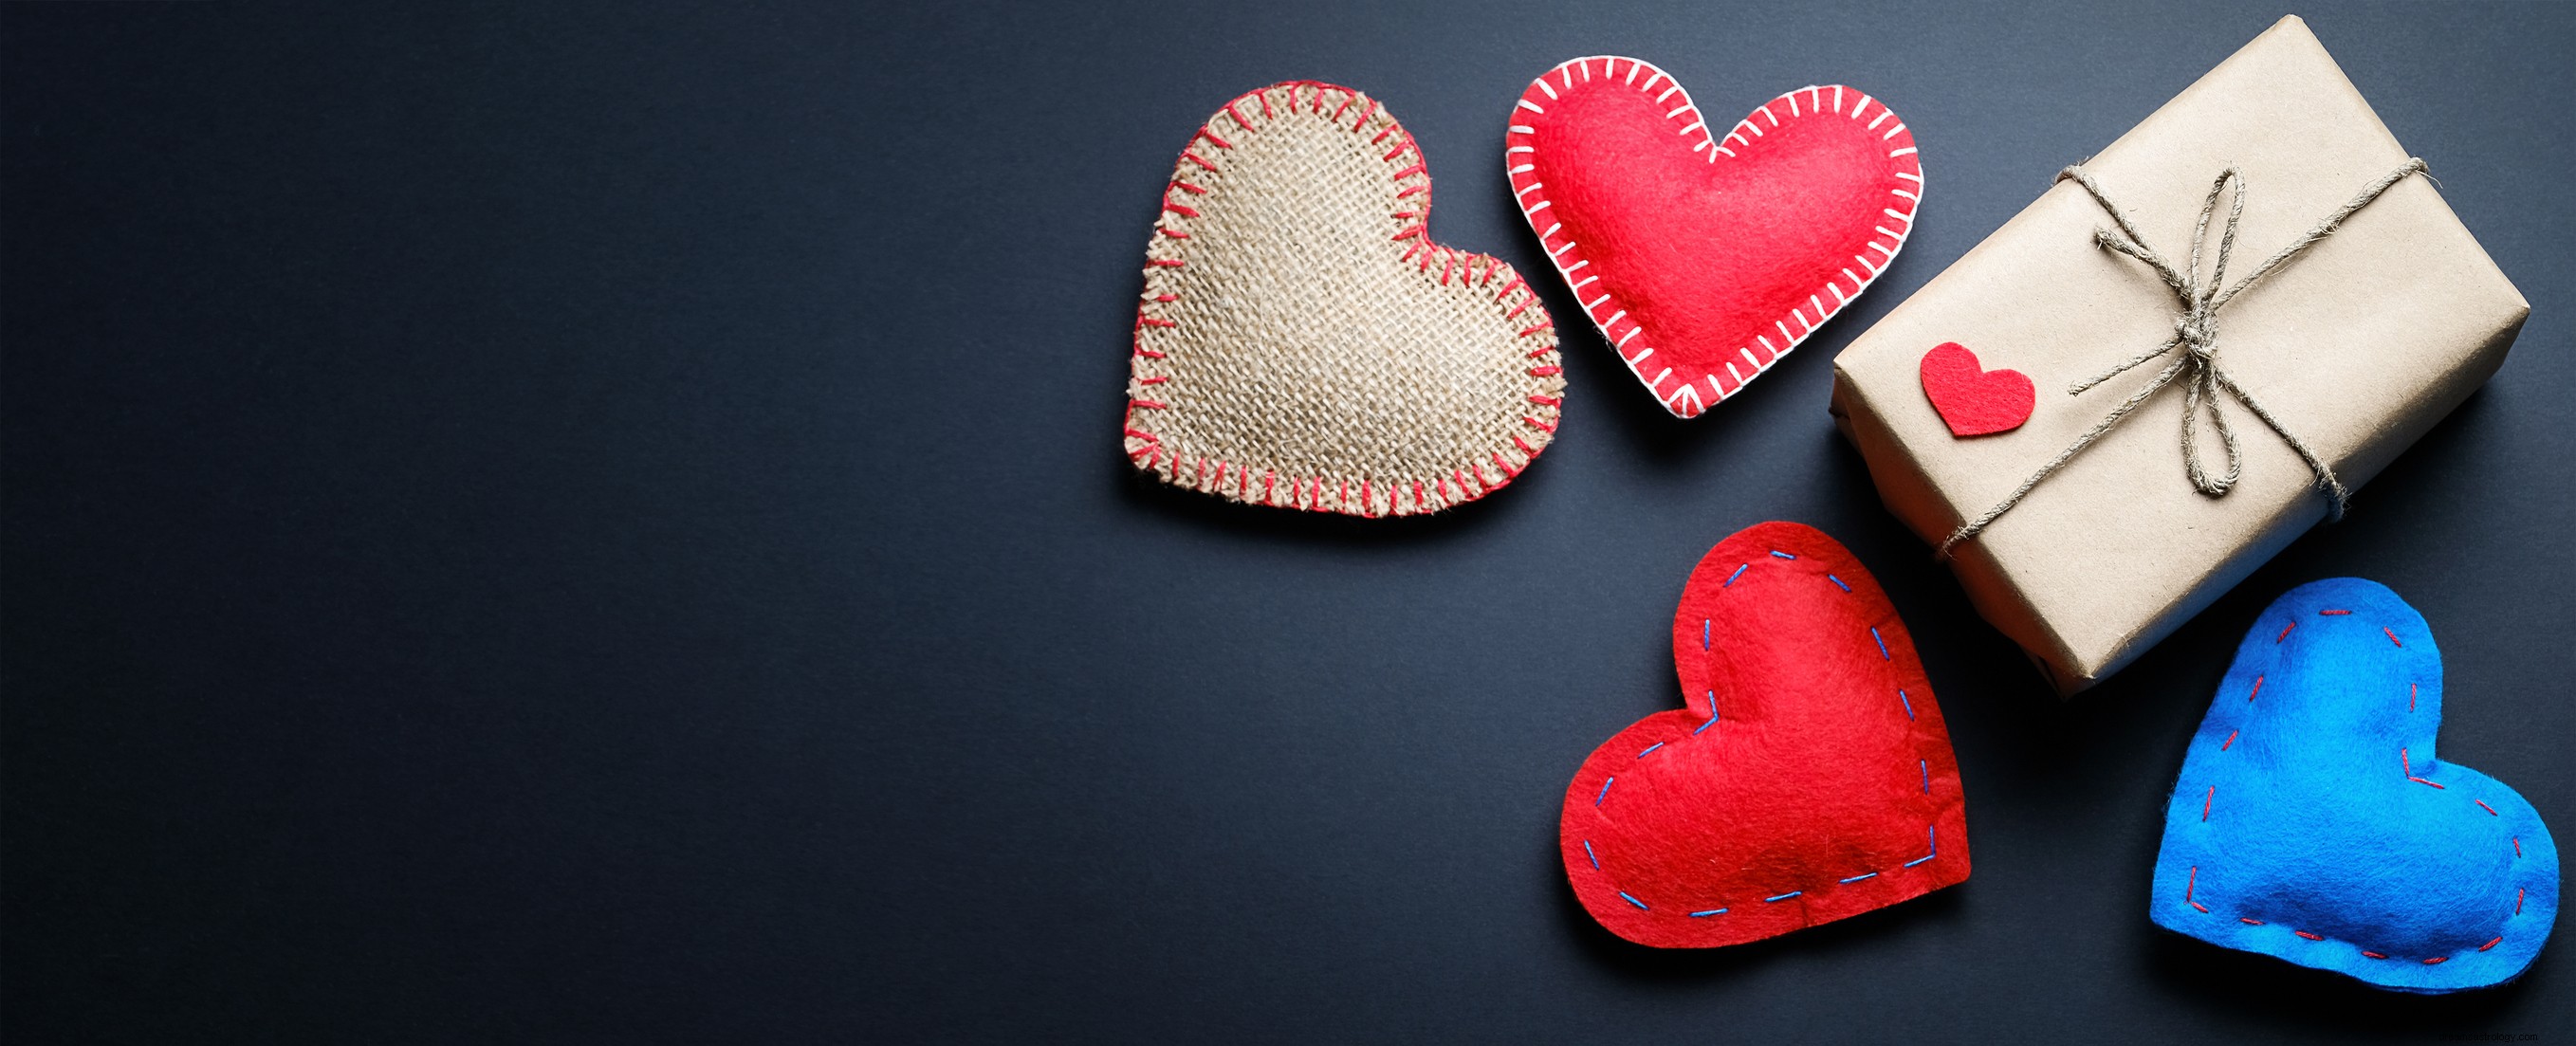 Valentines Special:Μάθετε πώς αρέσει στον σύντροφό σας να τον χαϊδεύουν με βάση το ζώδιό του 